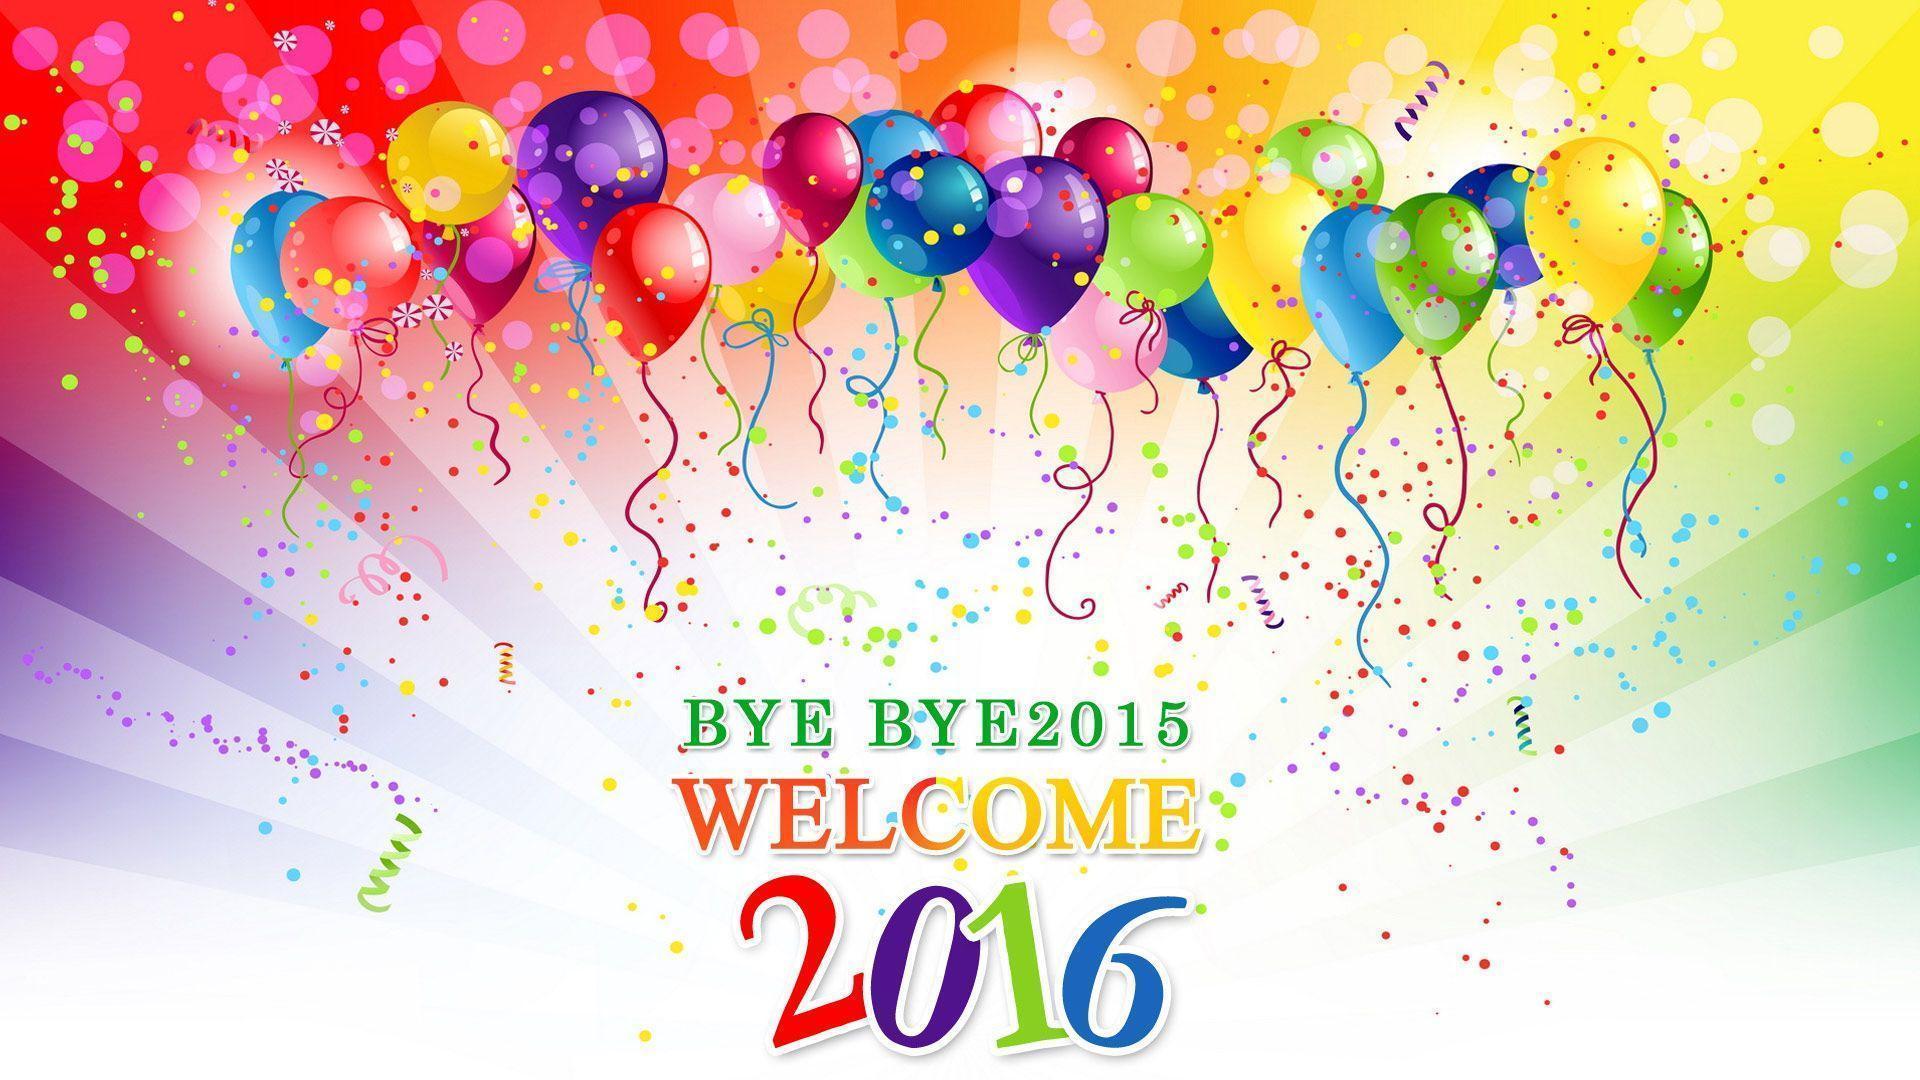 Good Bye 2015 Welcome 2016 Whatsapp FB Status Image Wallpaper